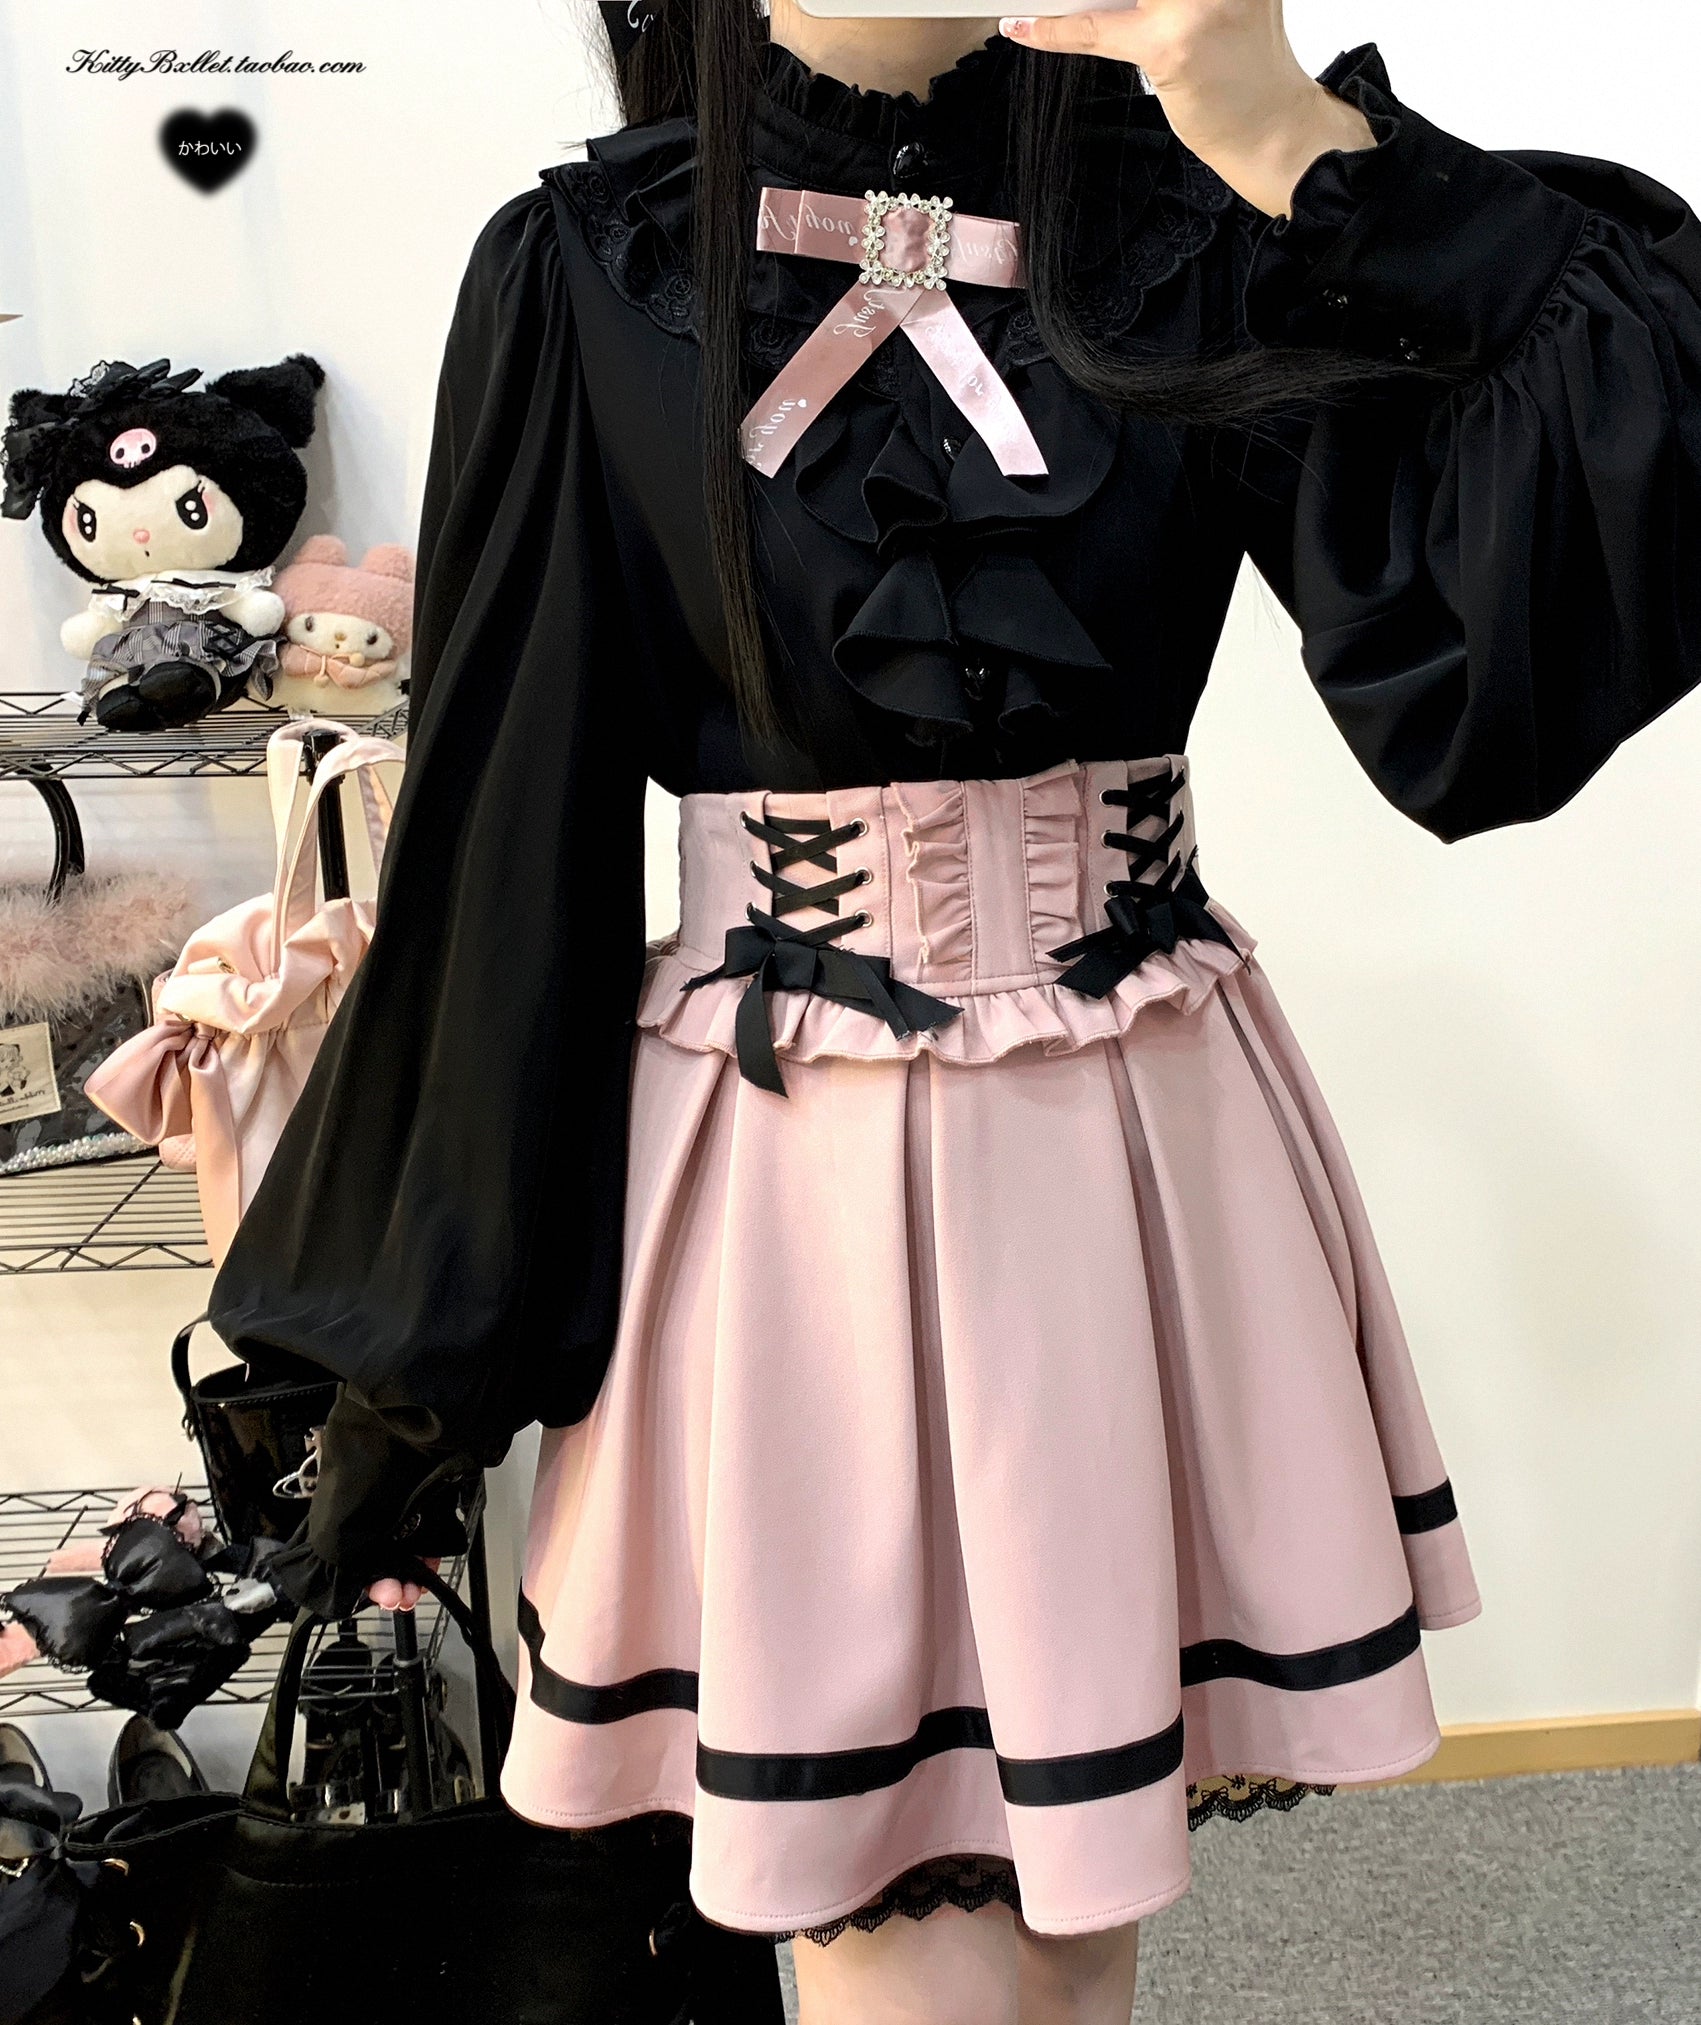 Jirai Kei Skirt High Waist Lace Up Skirt With Bow Tie 31860:396708